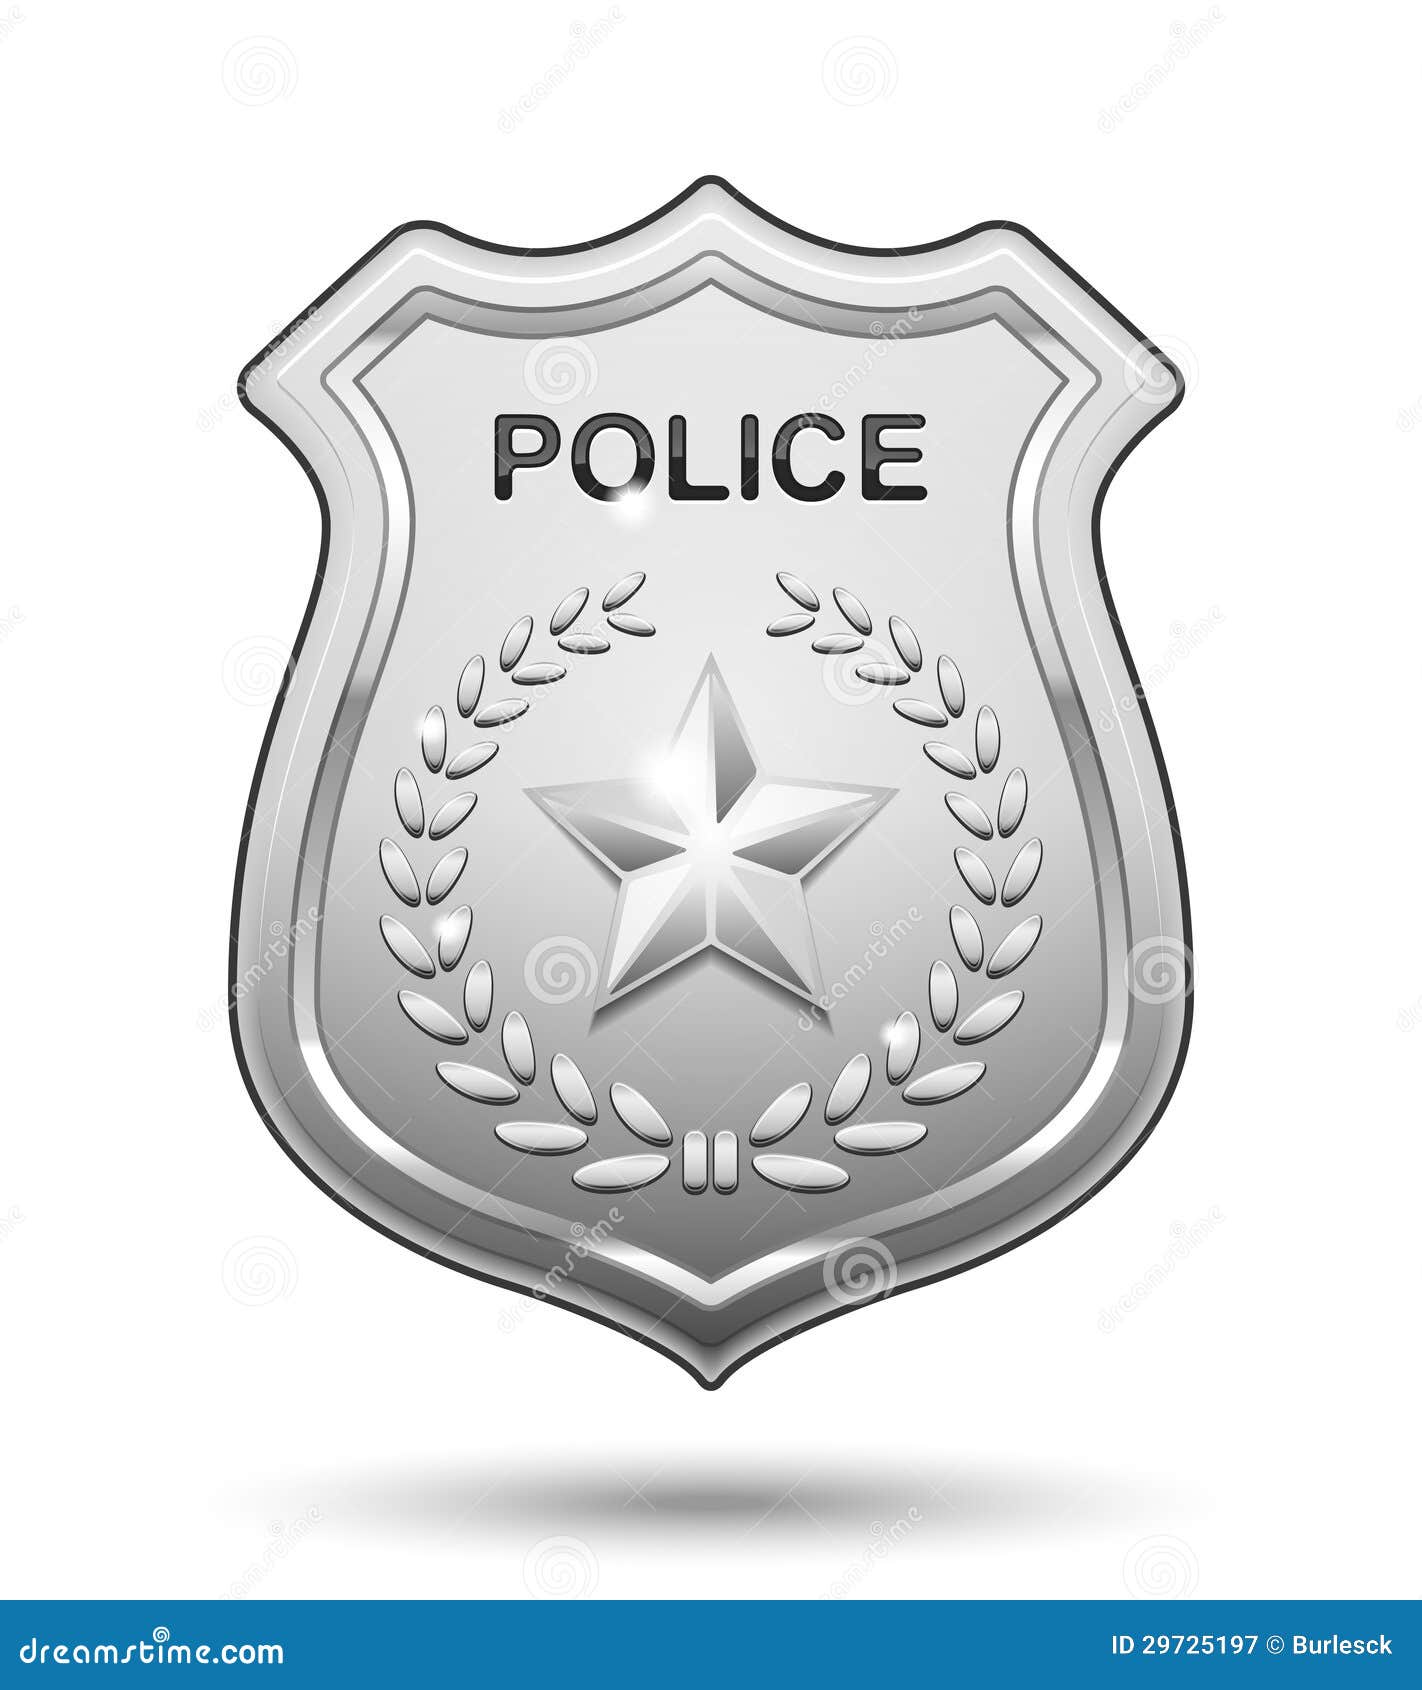  police badge